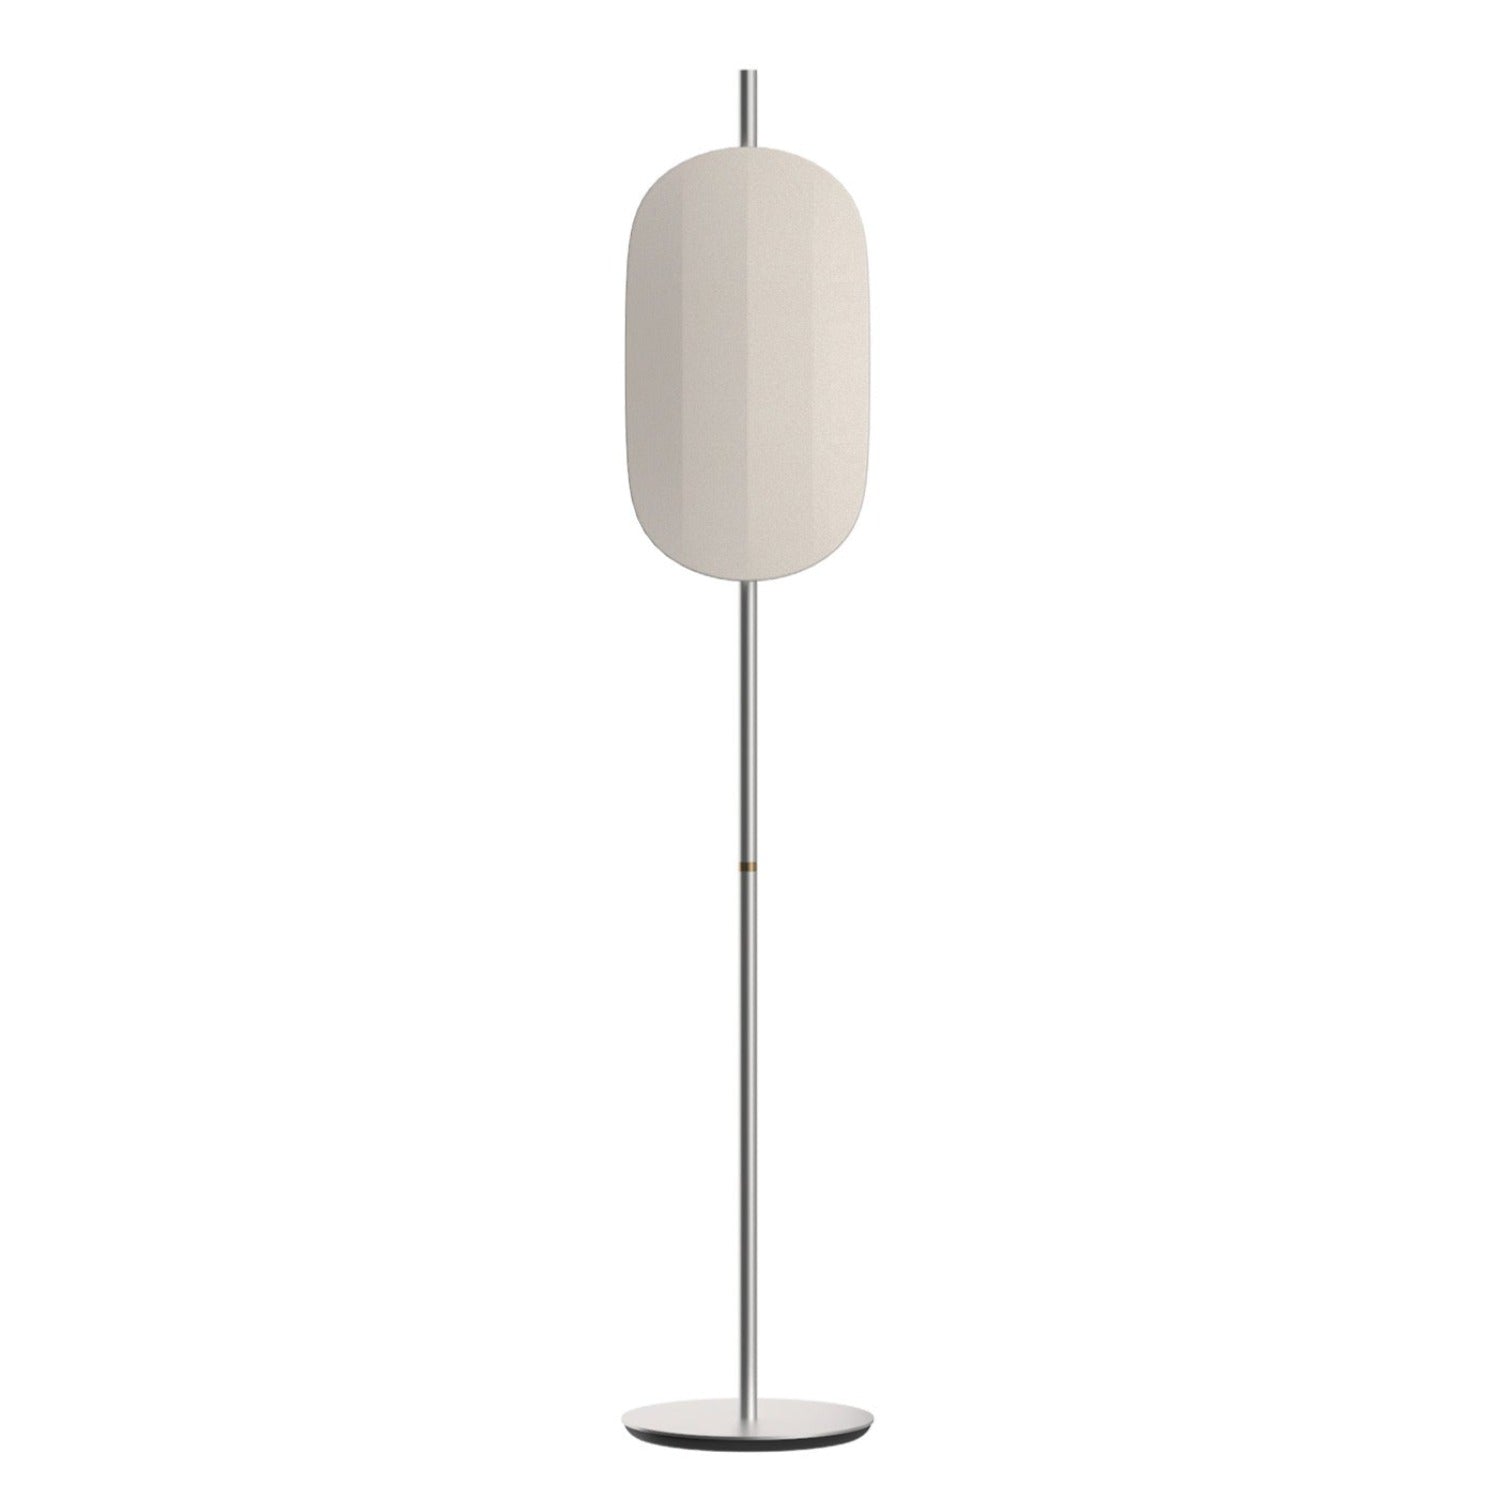 VOYAGE - Floor lamp in fabric and sleek aluminum design